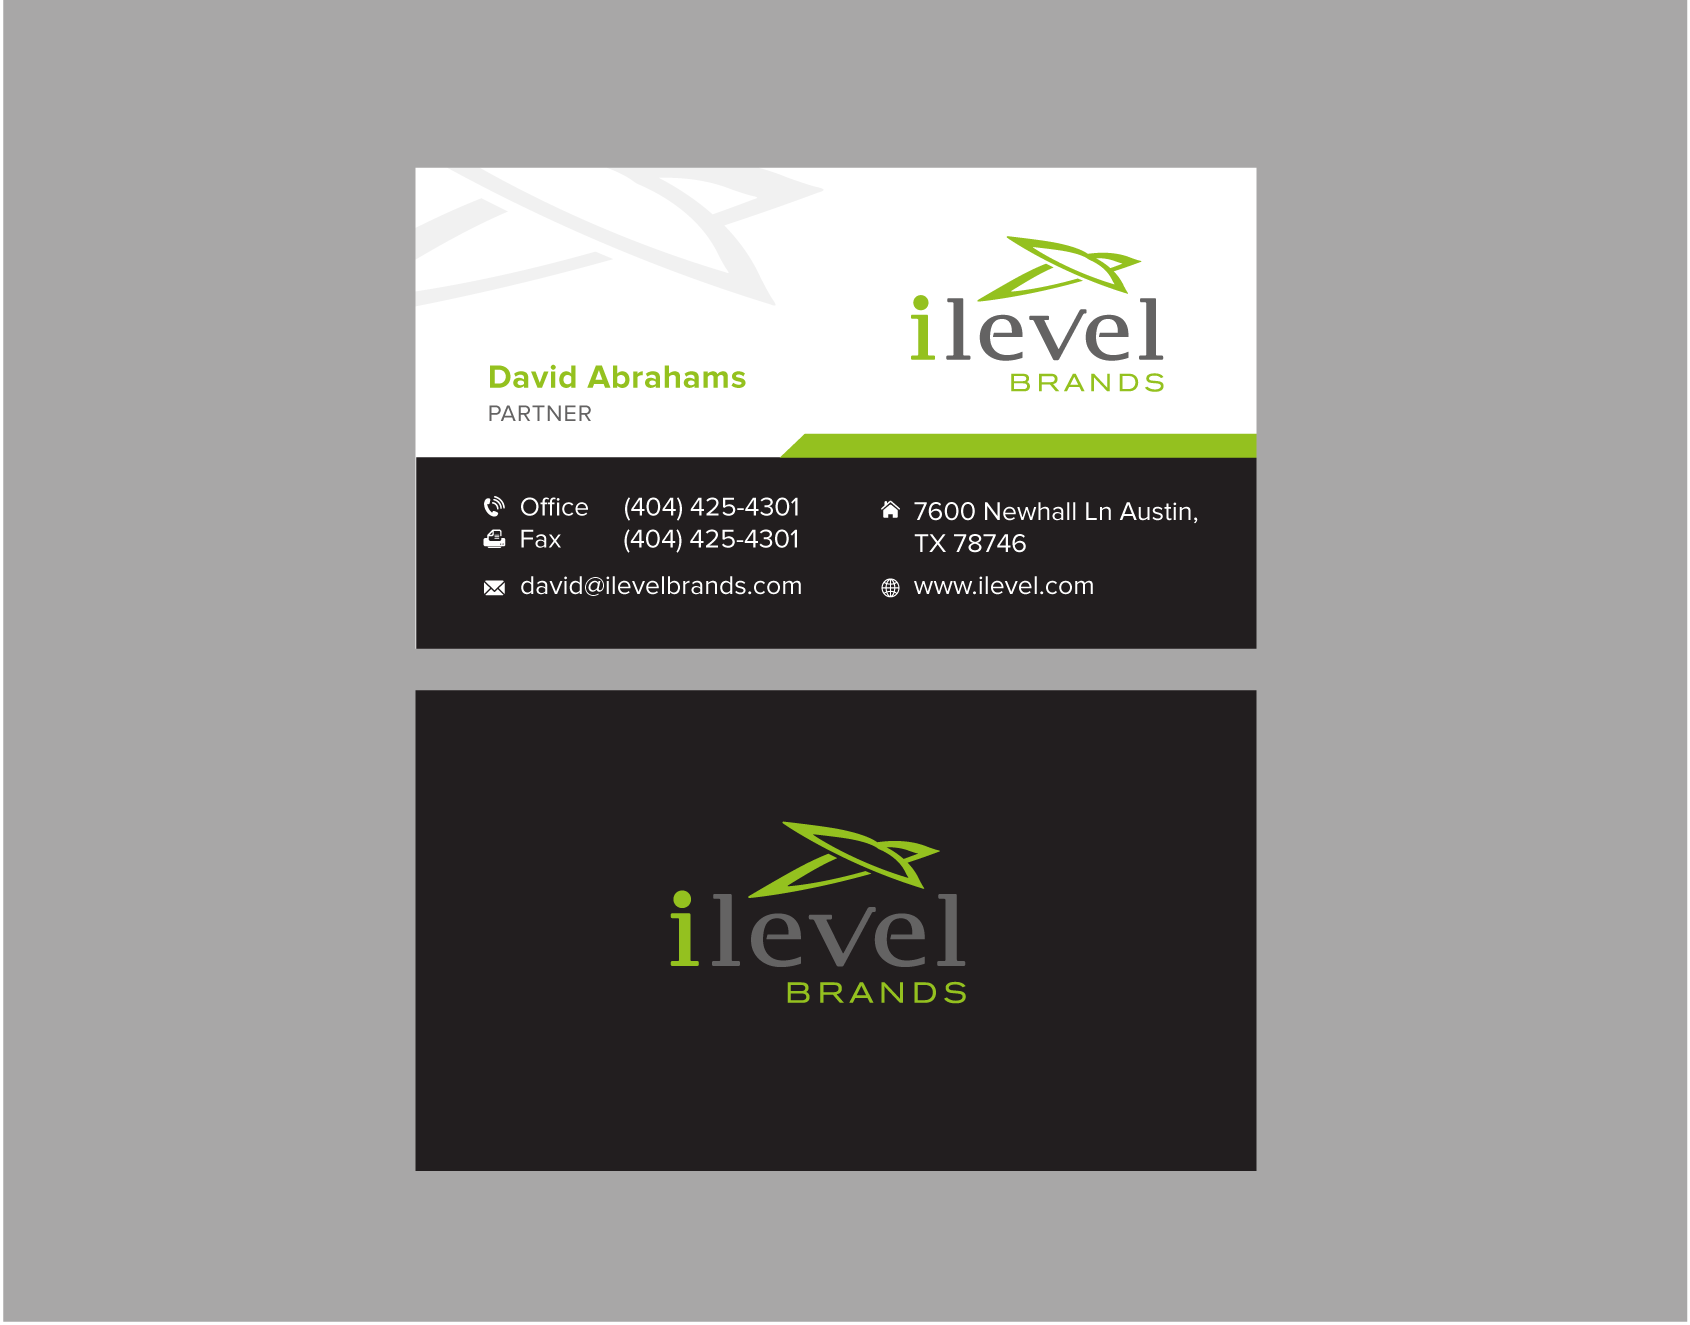 Business Card & Stationery Design entry 1563864 submitted by zayyadi to the Business Card & Stationery Design for iLevel Brands run by ilevelpartner